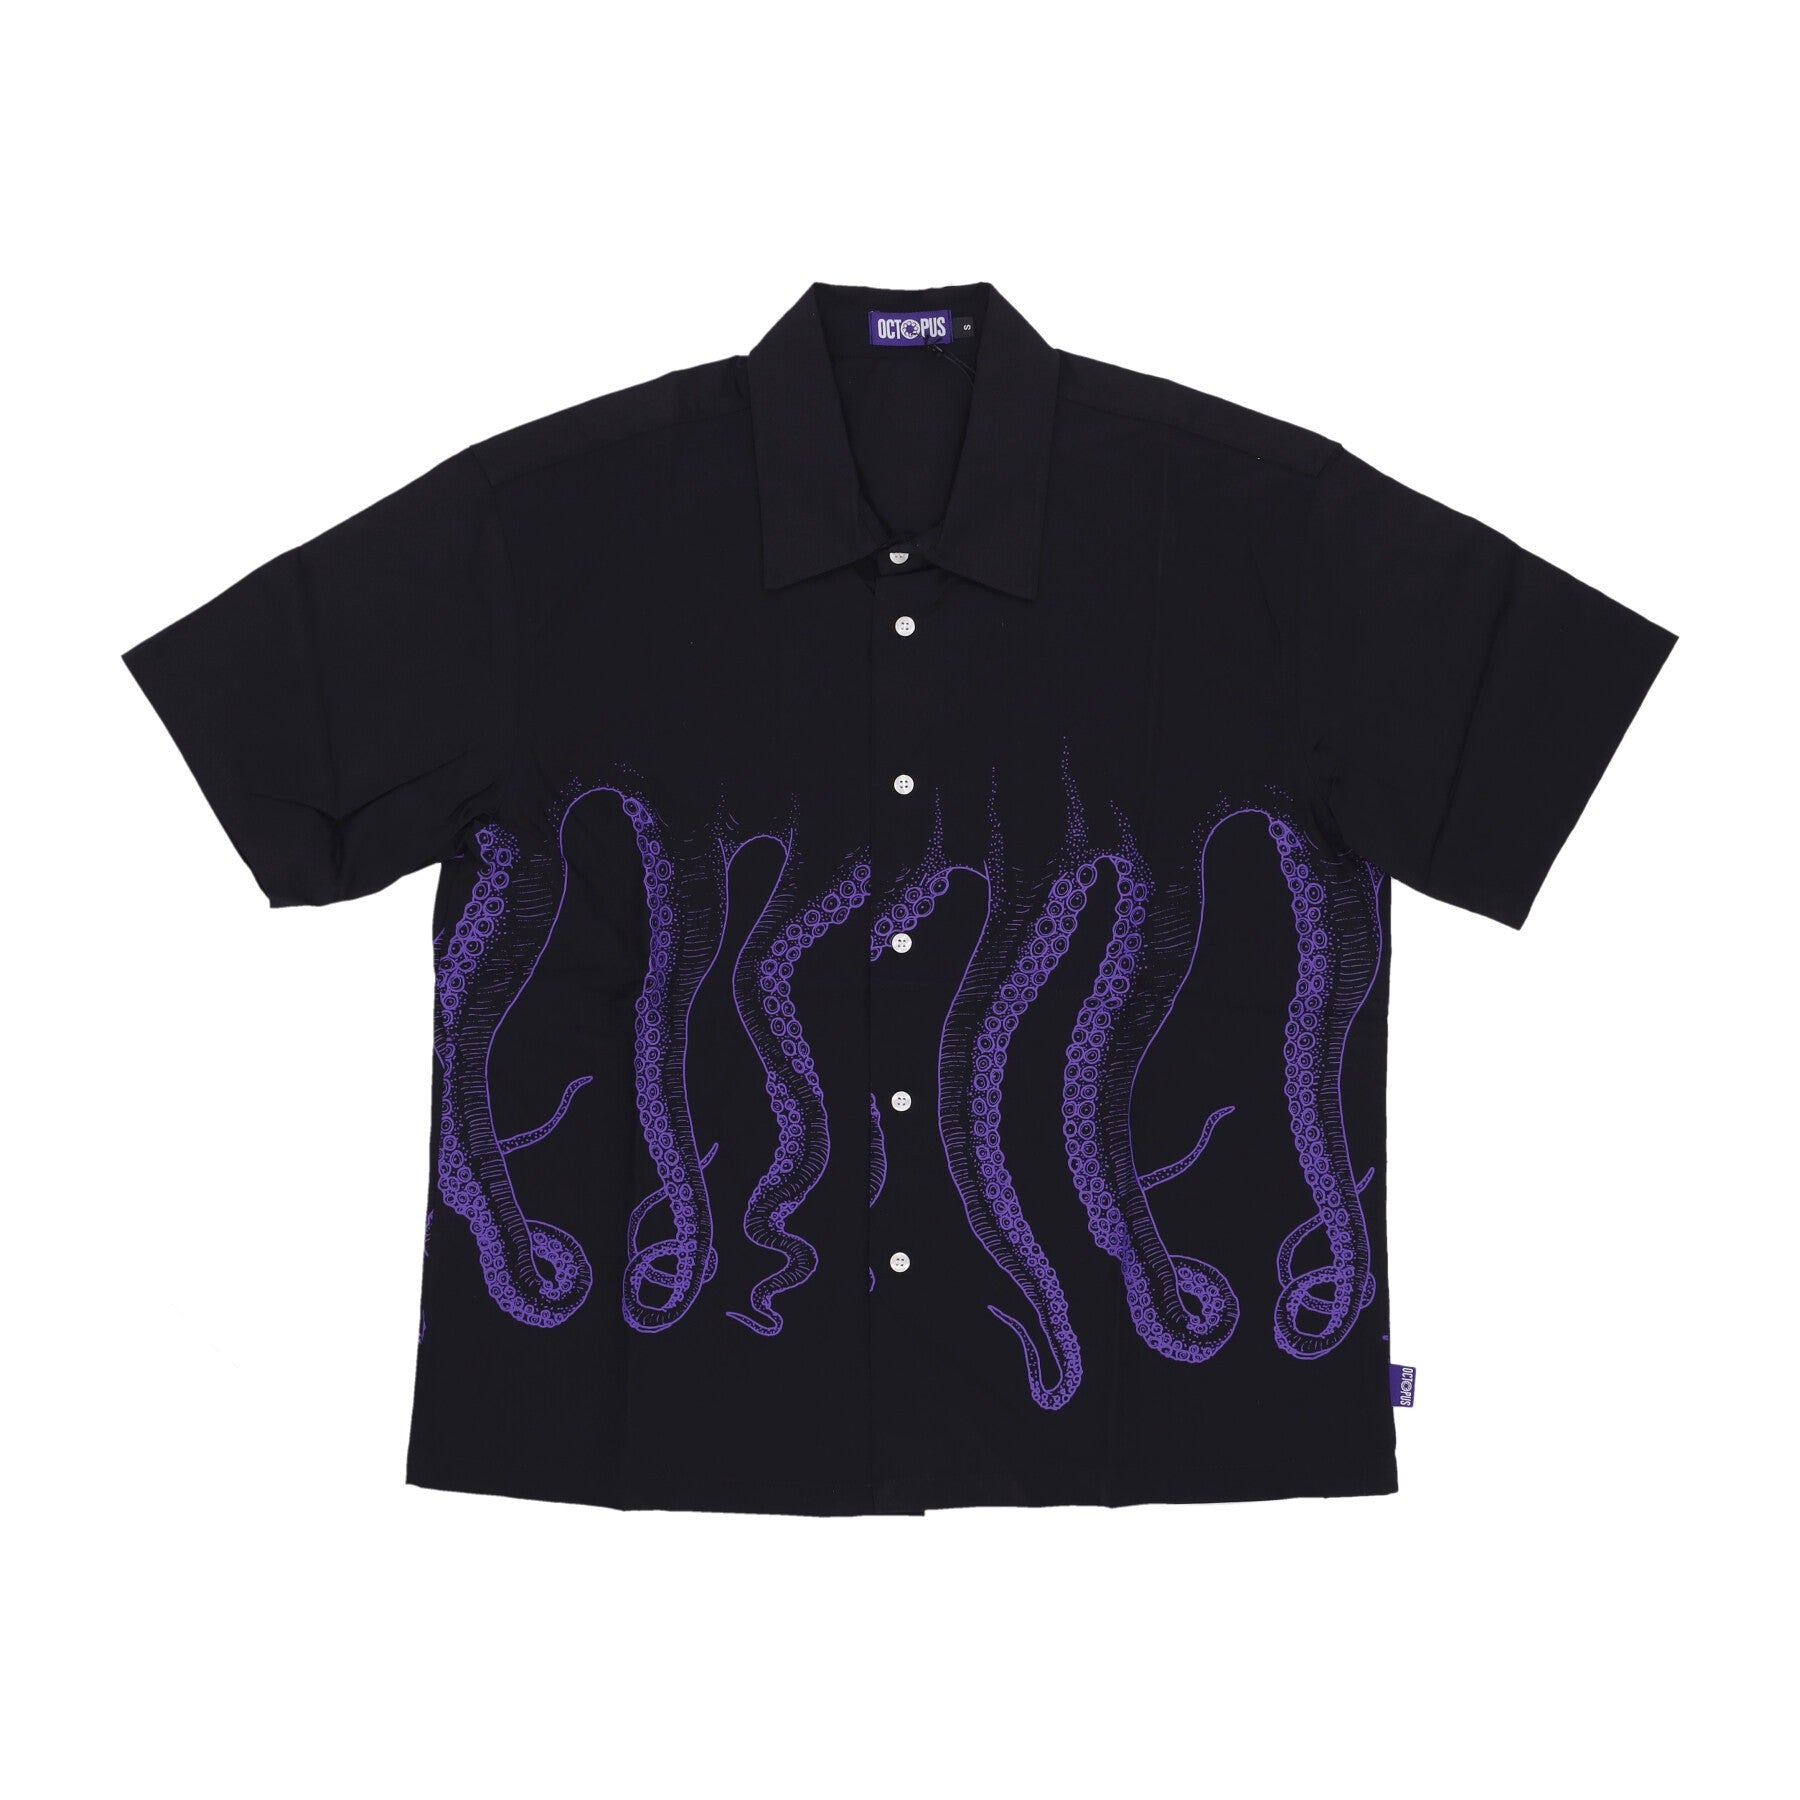 Octopus, Camicia Manica Corta Uomo Outline Shirt, Black/purple